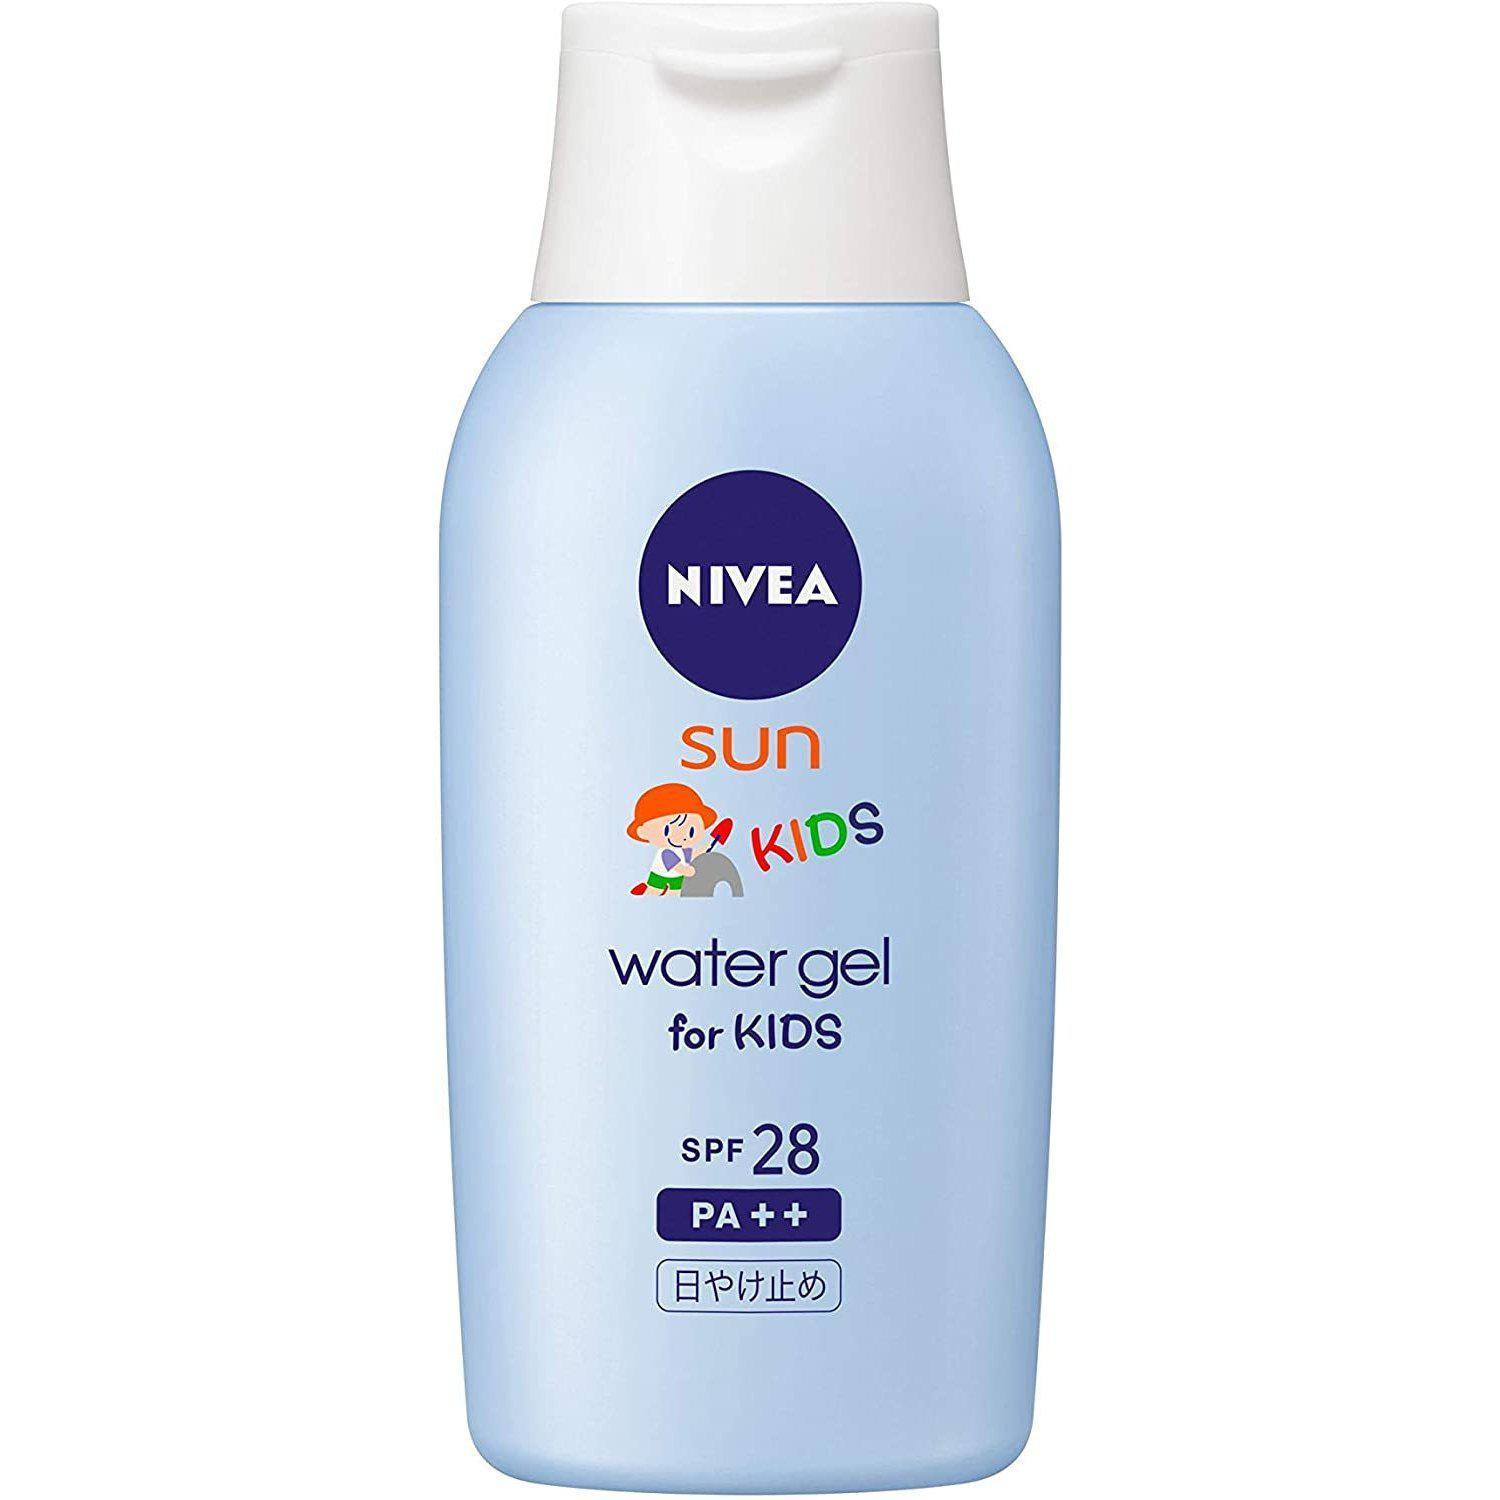 Nivea Sun Protect Water Gel for Kids SPF28 PA++ 120g